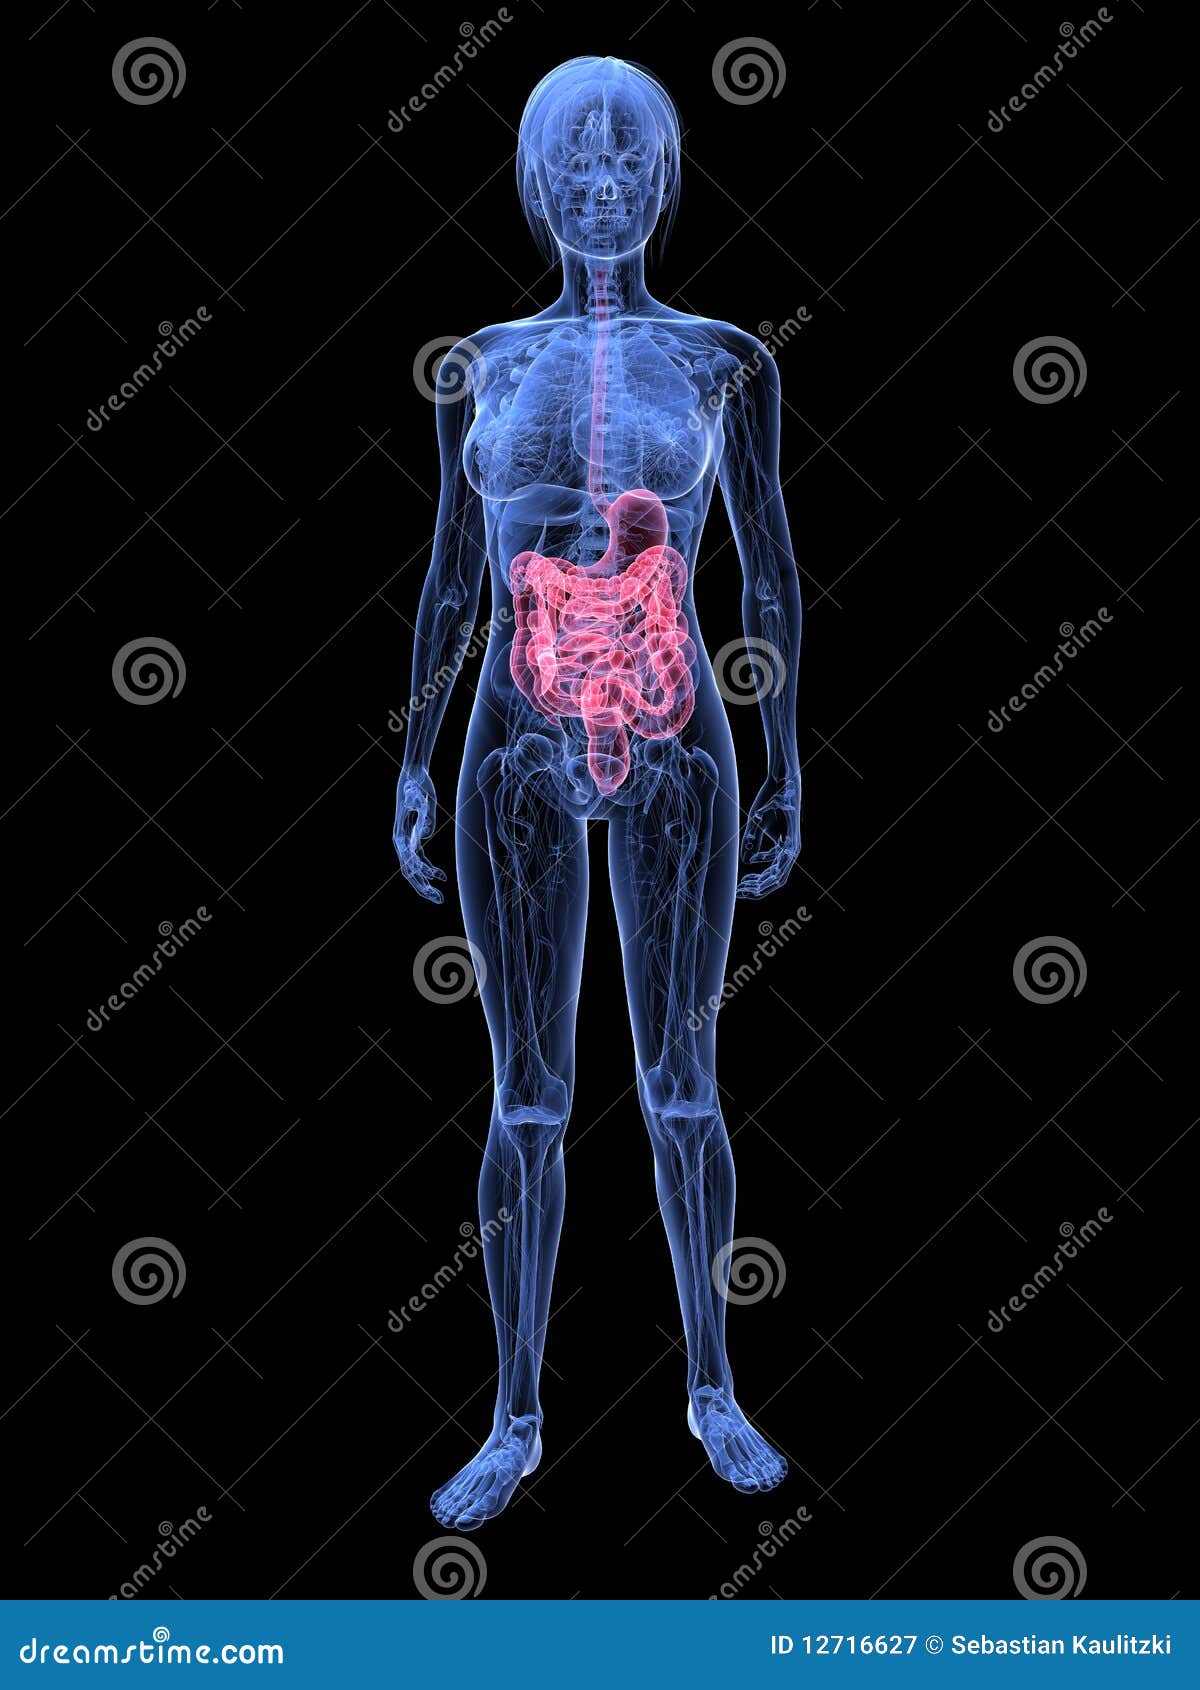 Female digestive system stock illustration. Image of medical - 12716627